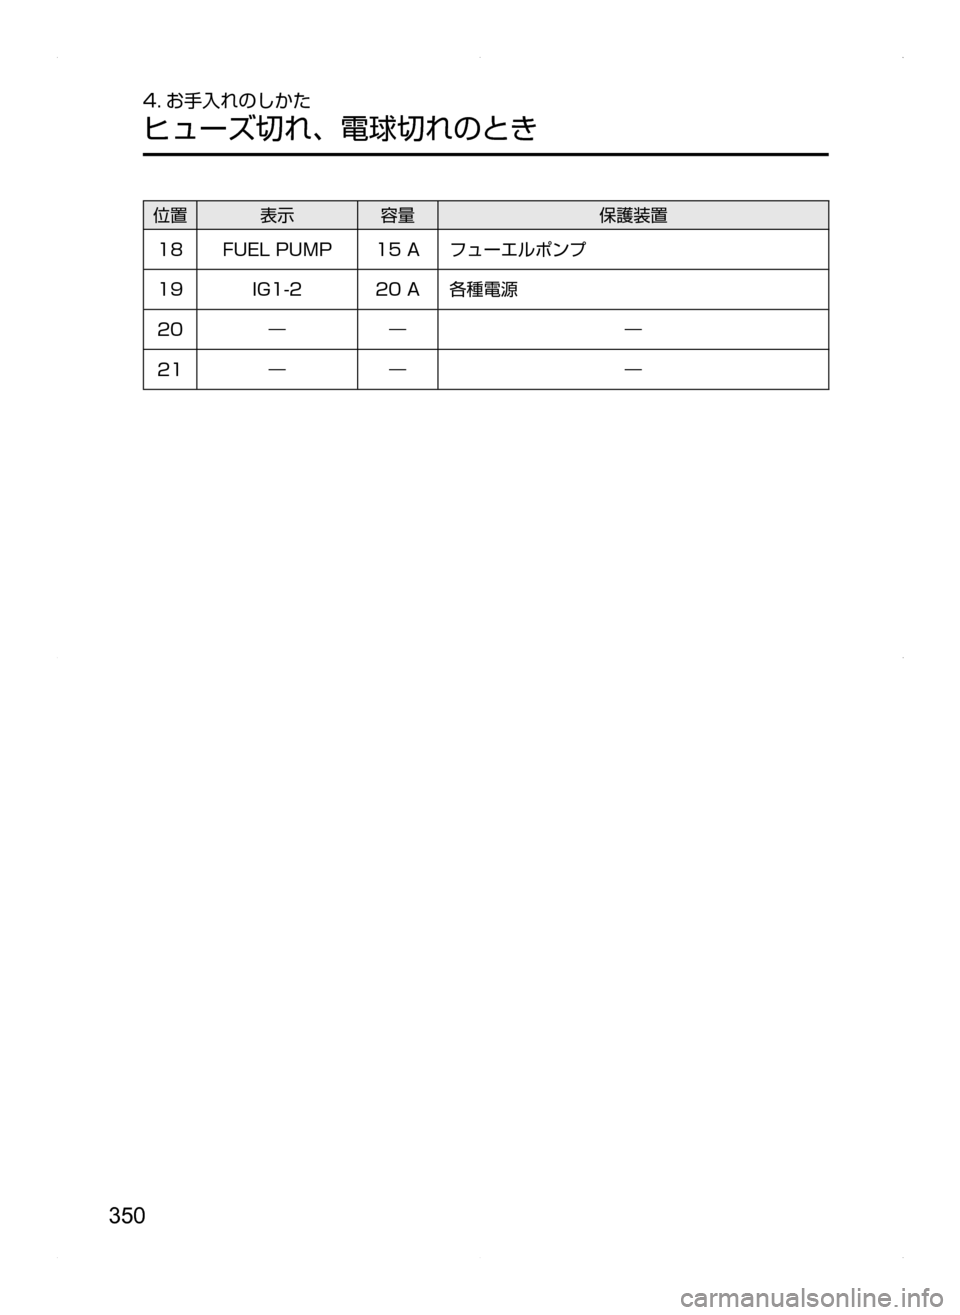 MAZDA MODEL AXELA HYBRID 2014  アクセラハイブリッド｜取扱説明書 (in Japanese) 350
4. お手入れのしかた
ヒューズ切れ､ 電球切れのとき
位置表示容量保護装置
18FUEL.PUMP15.Aフューエルポンプ
19IG1-220.A各種電源
20―――
21―――
AXELA